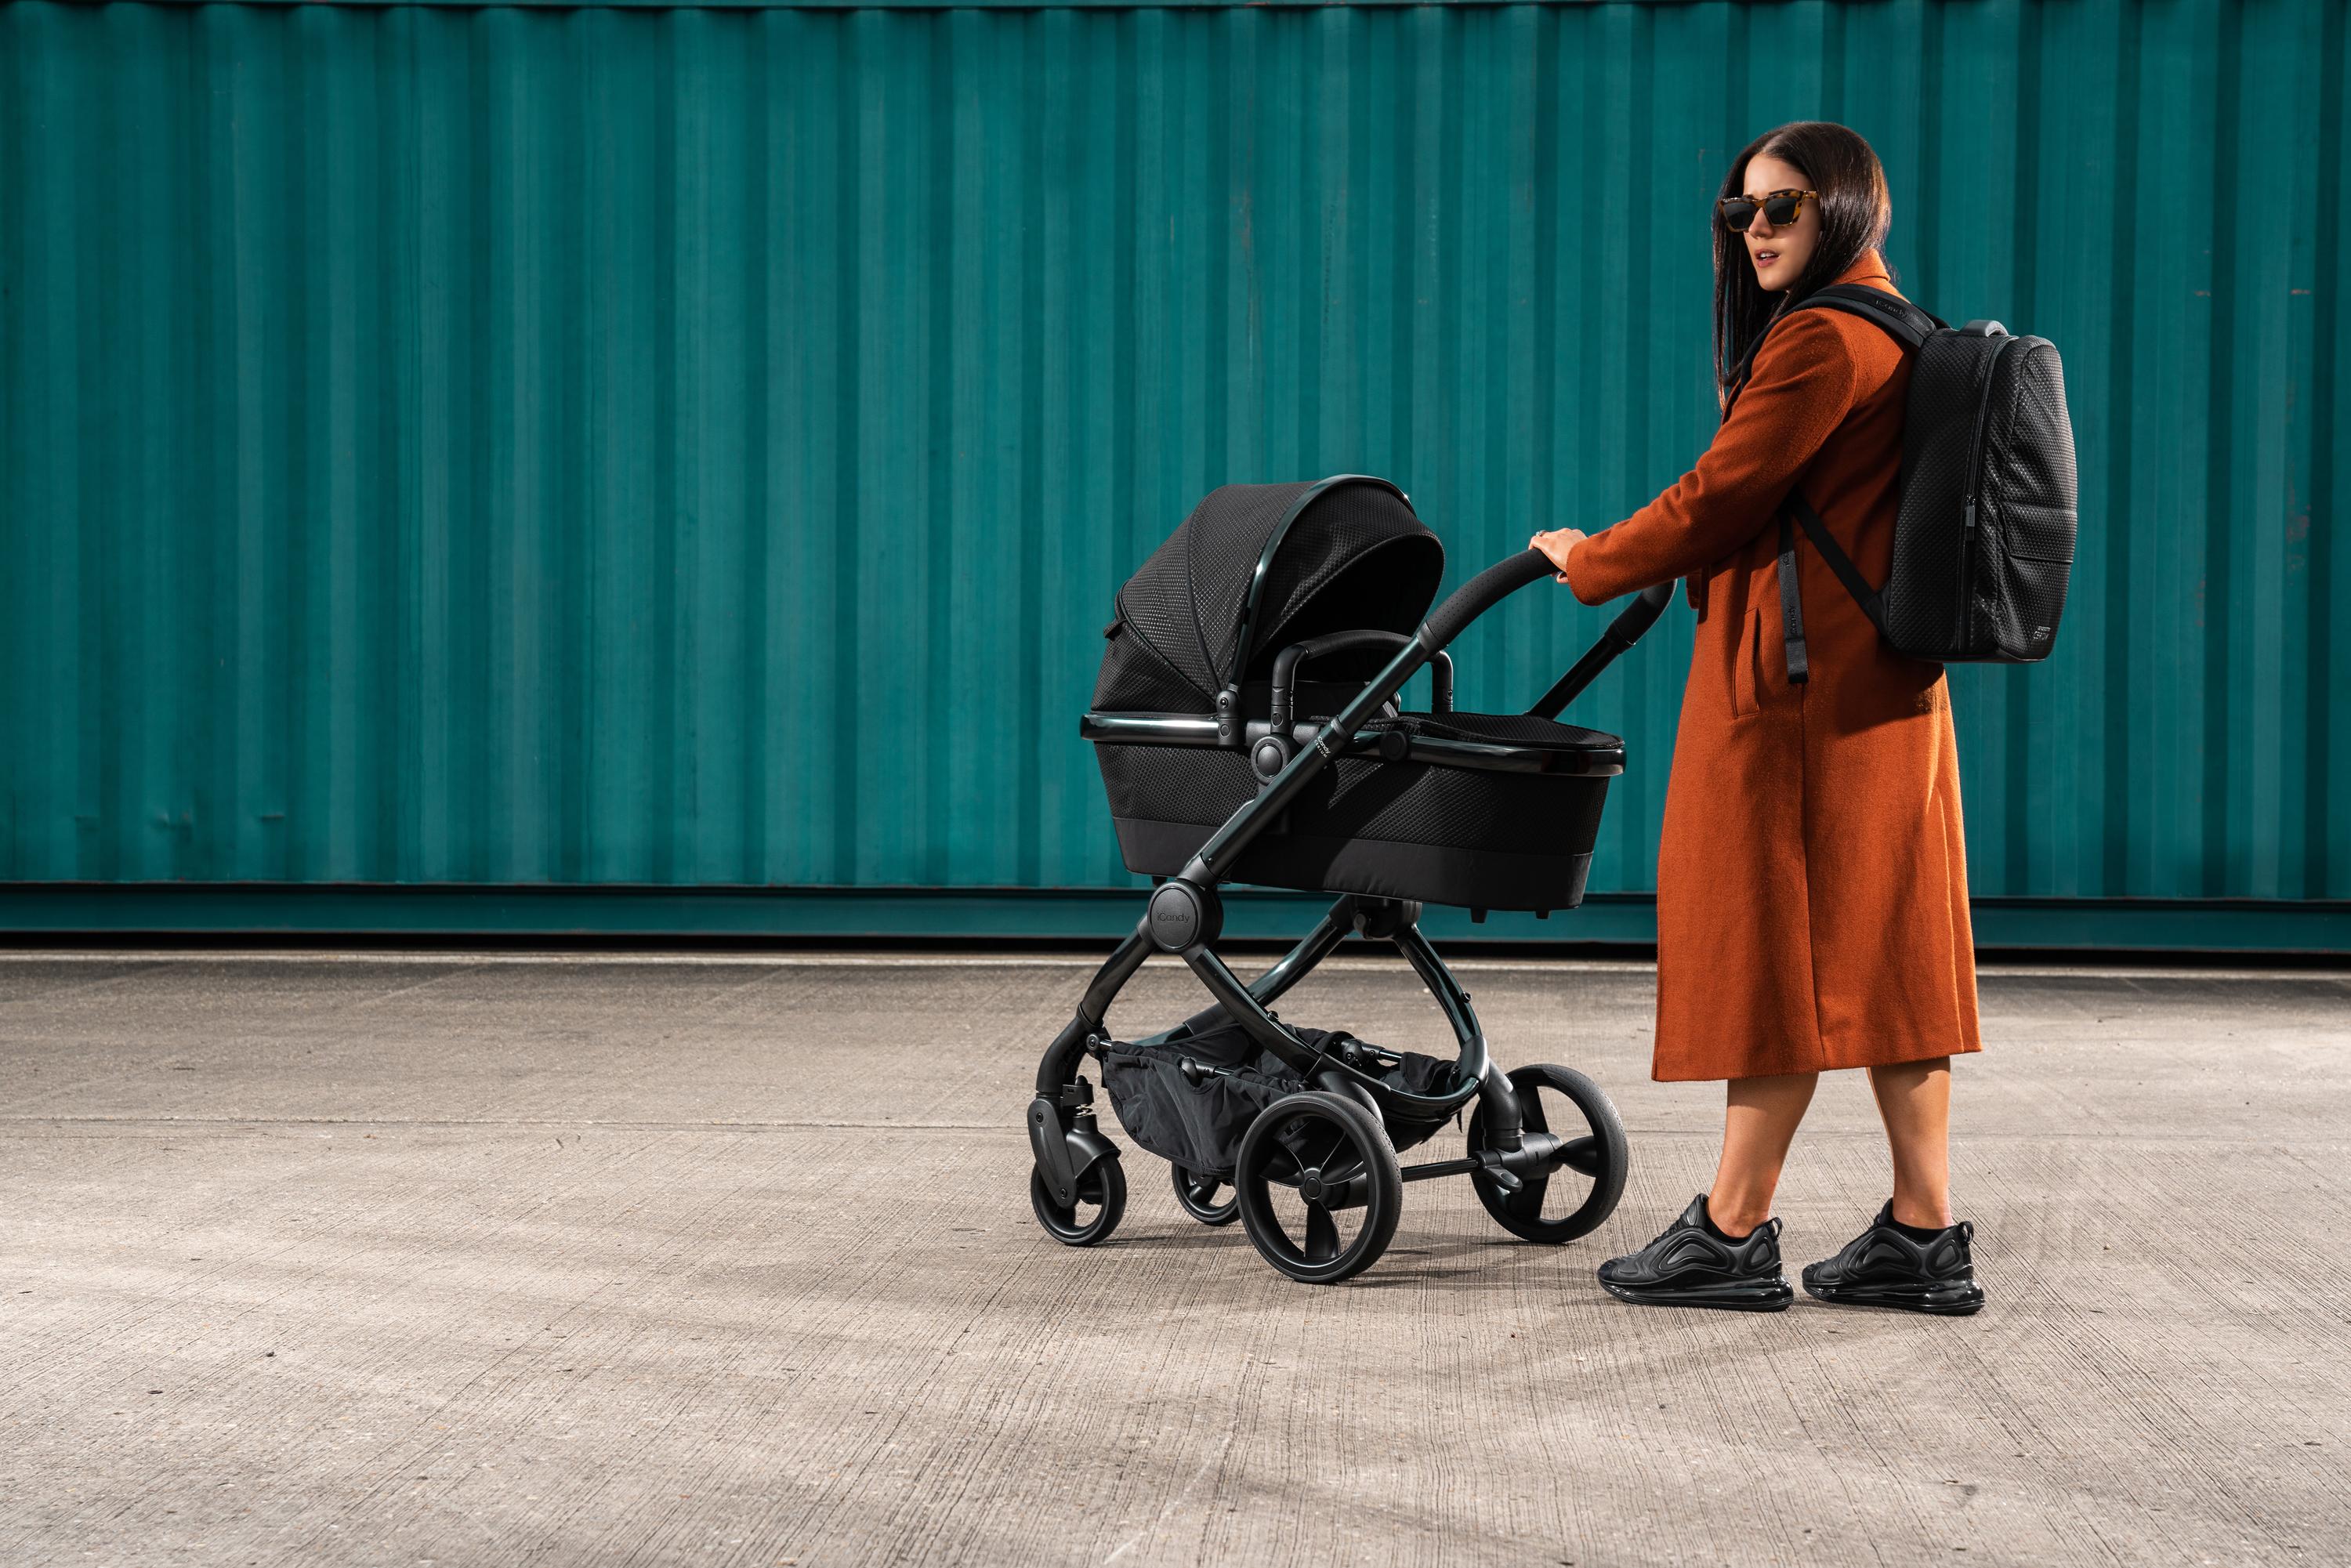 baby event stroller